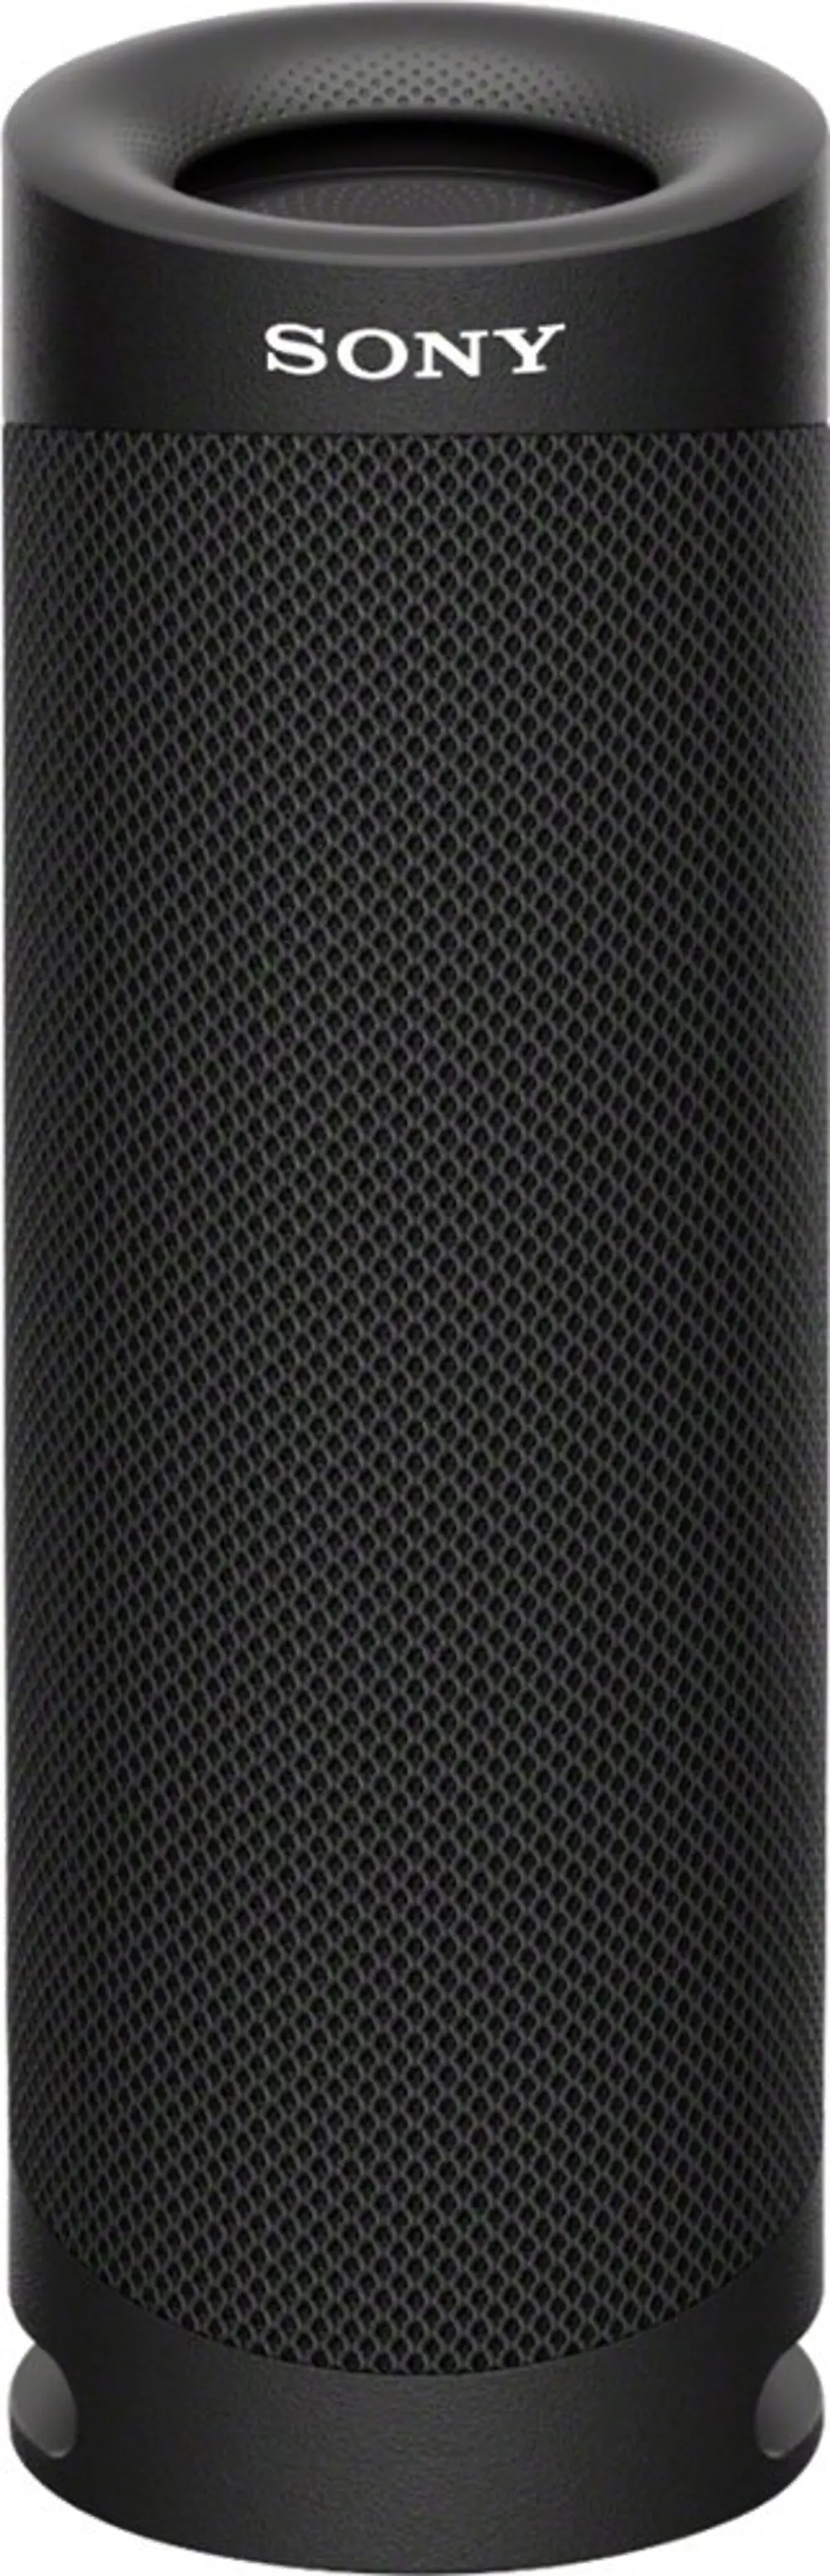 SRSXB23/BLACK Sony Black Waterproof Portable Speaker with Extra Bass - XB23-1